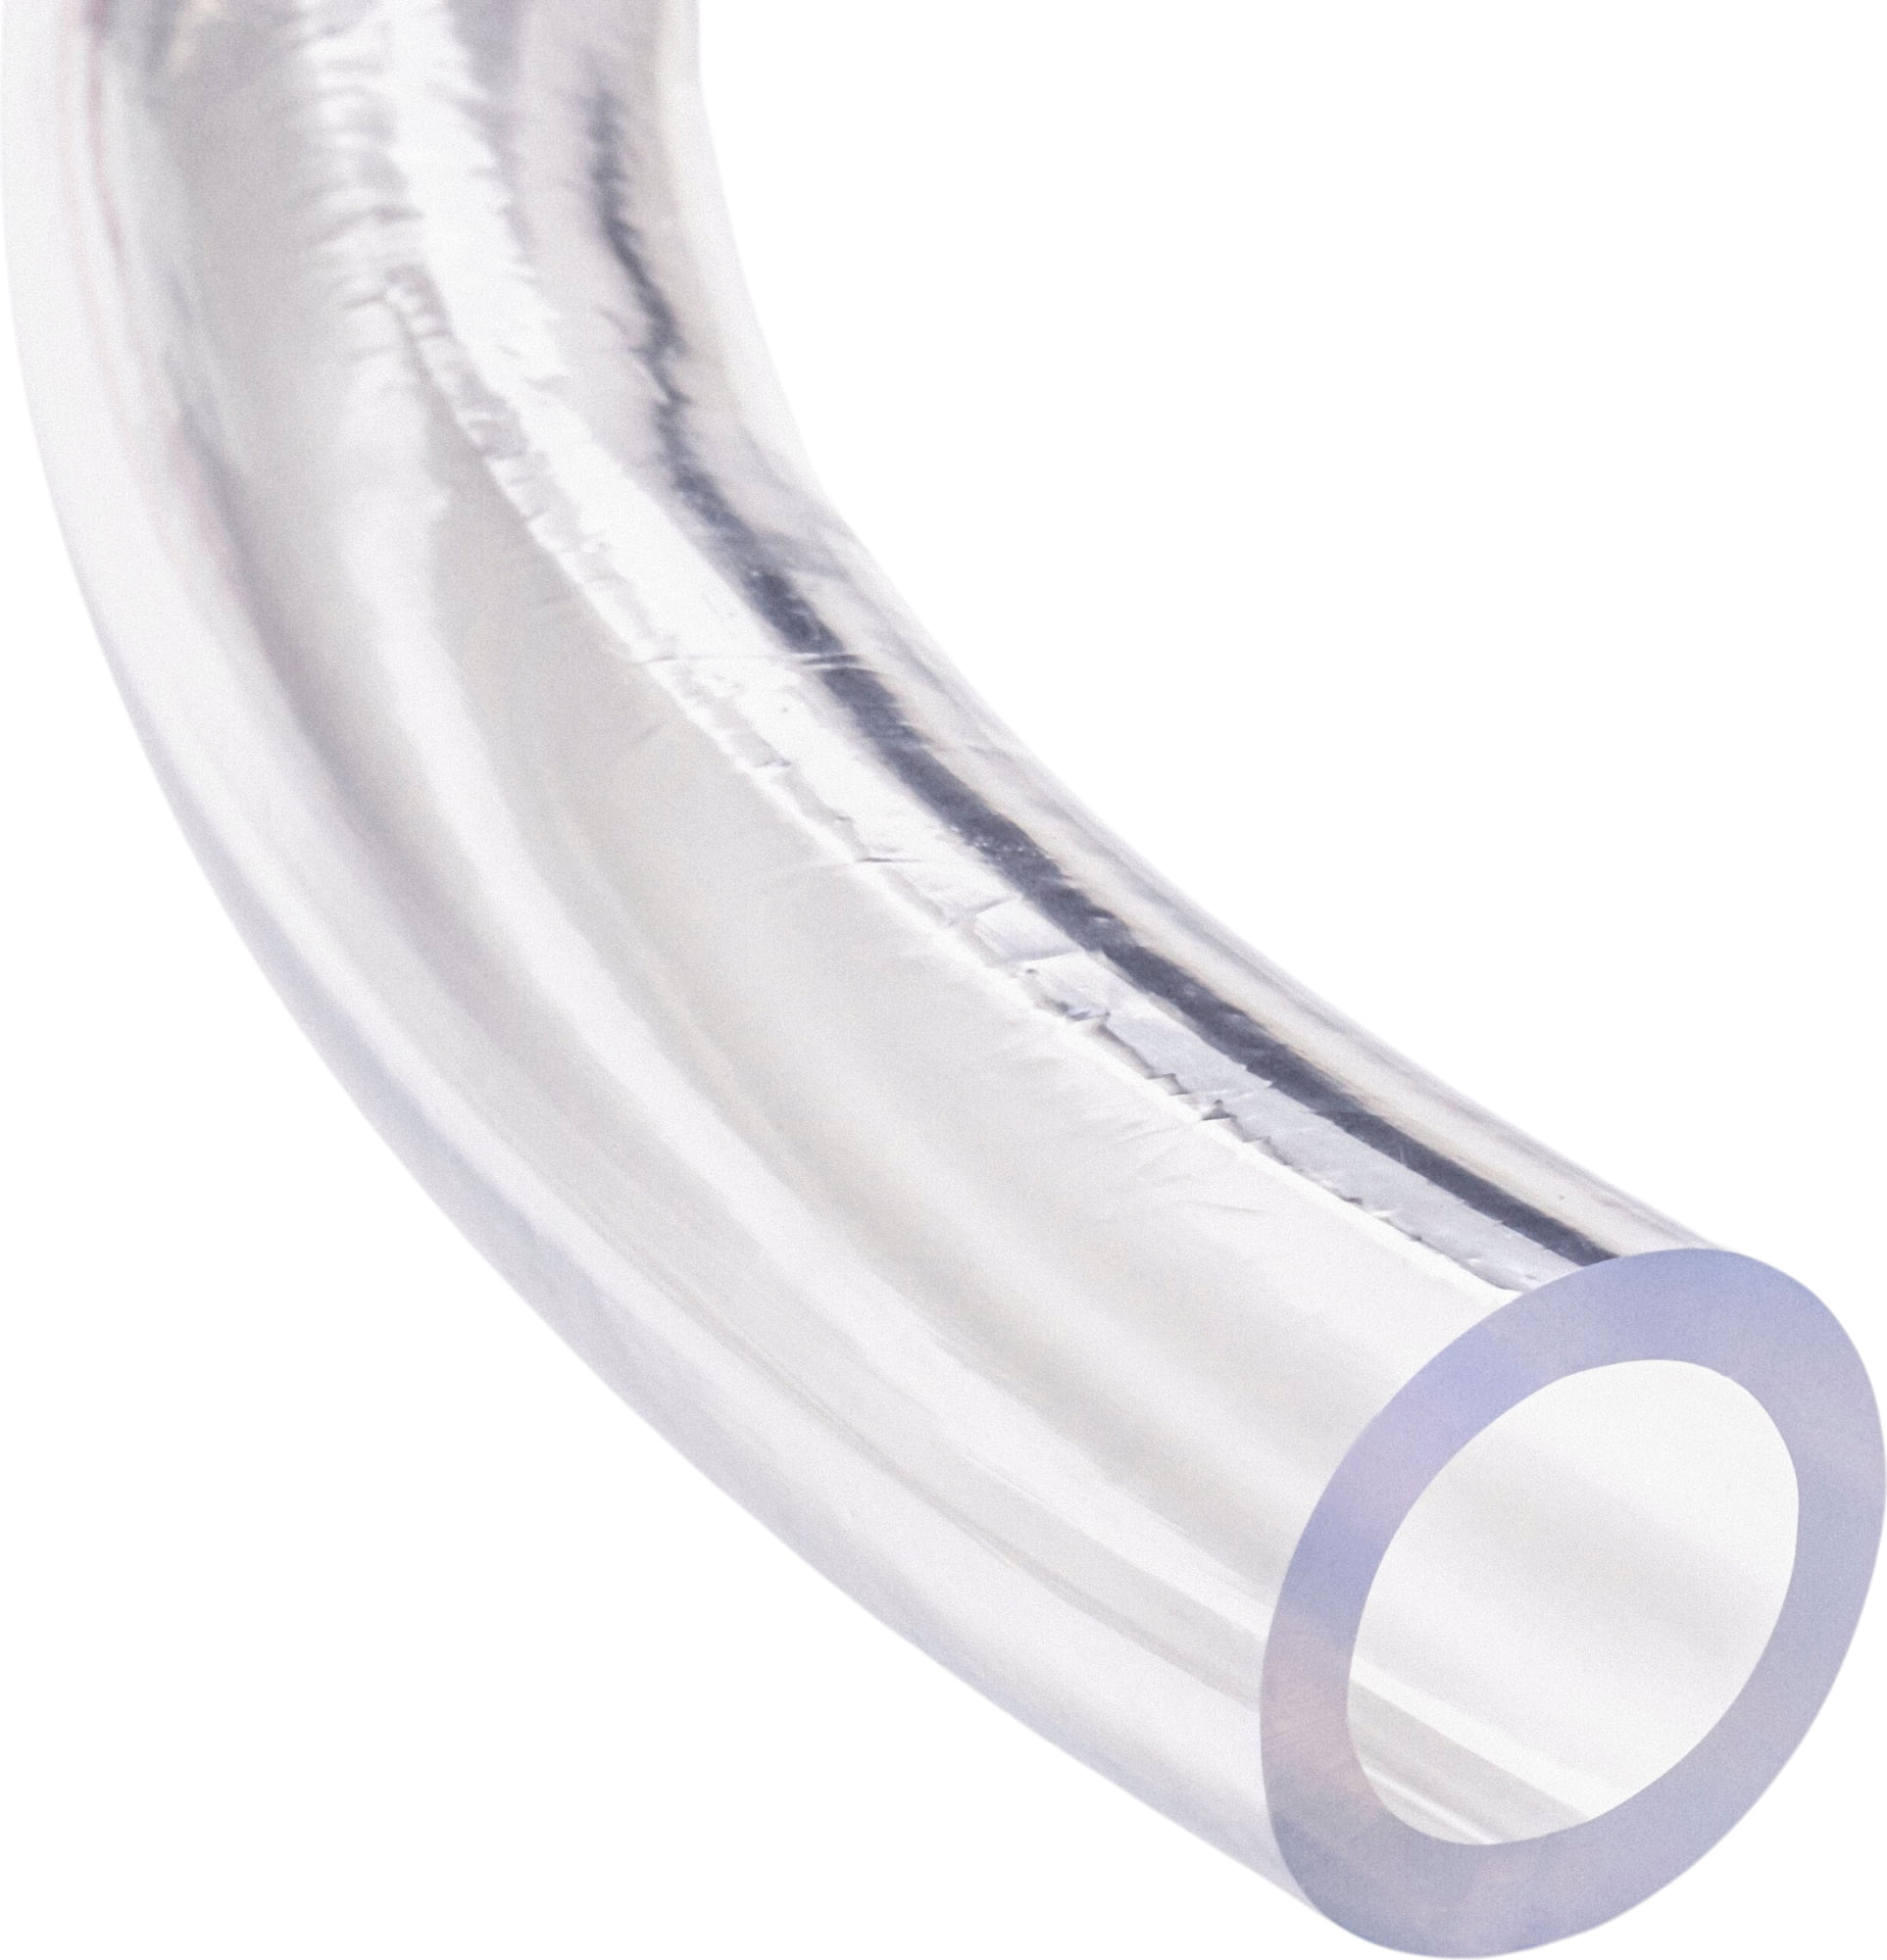 PVC Tubing 12/16 mm - Transparent 3 m